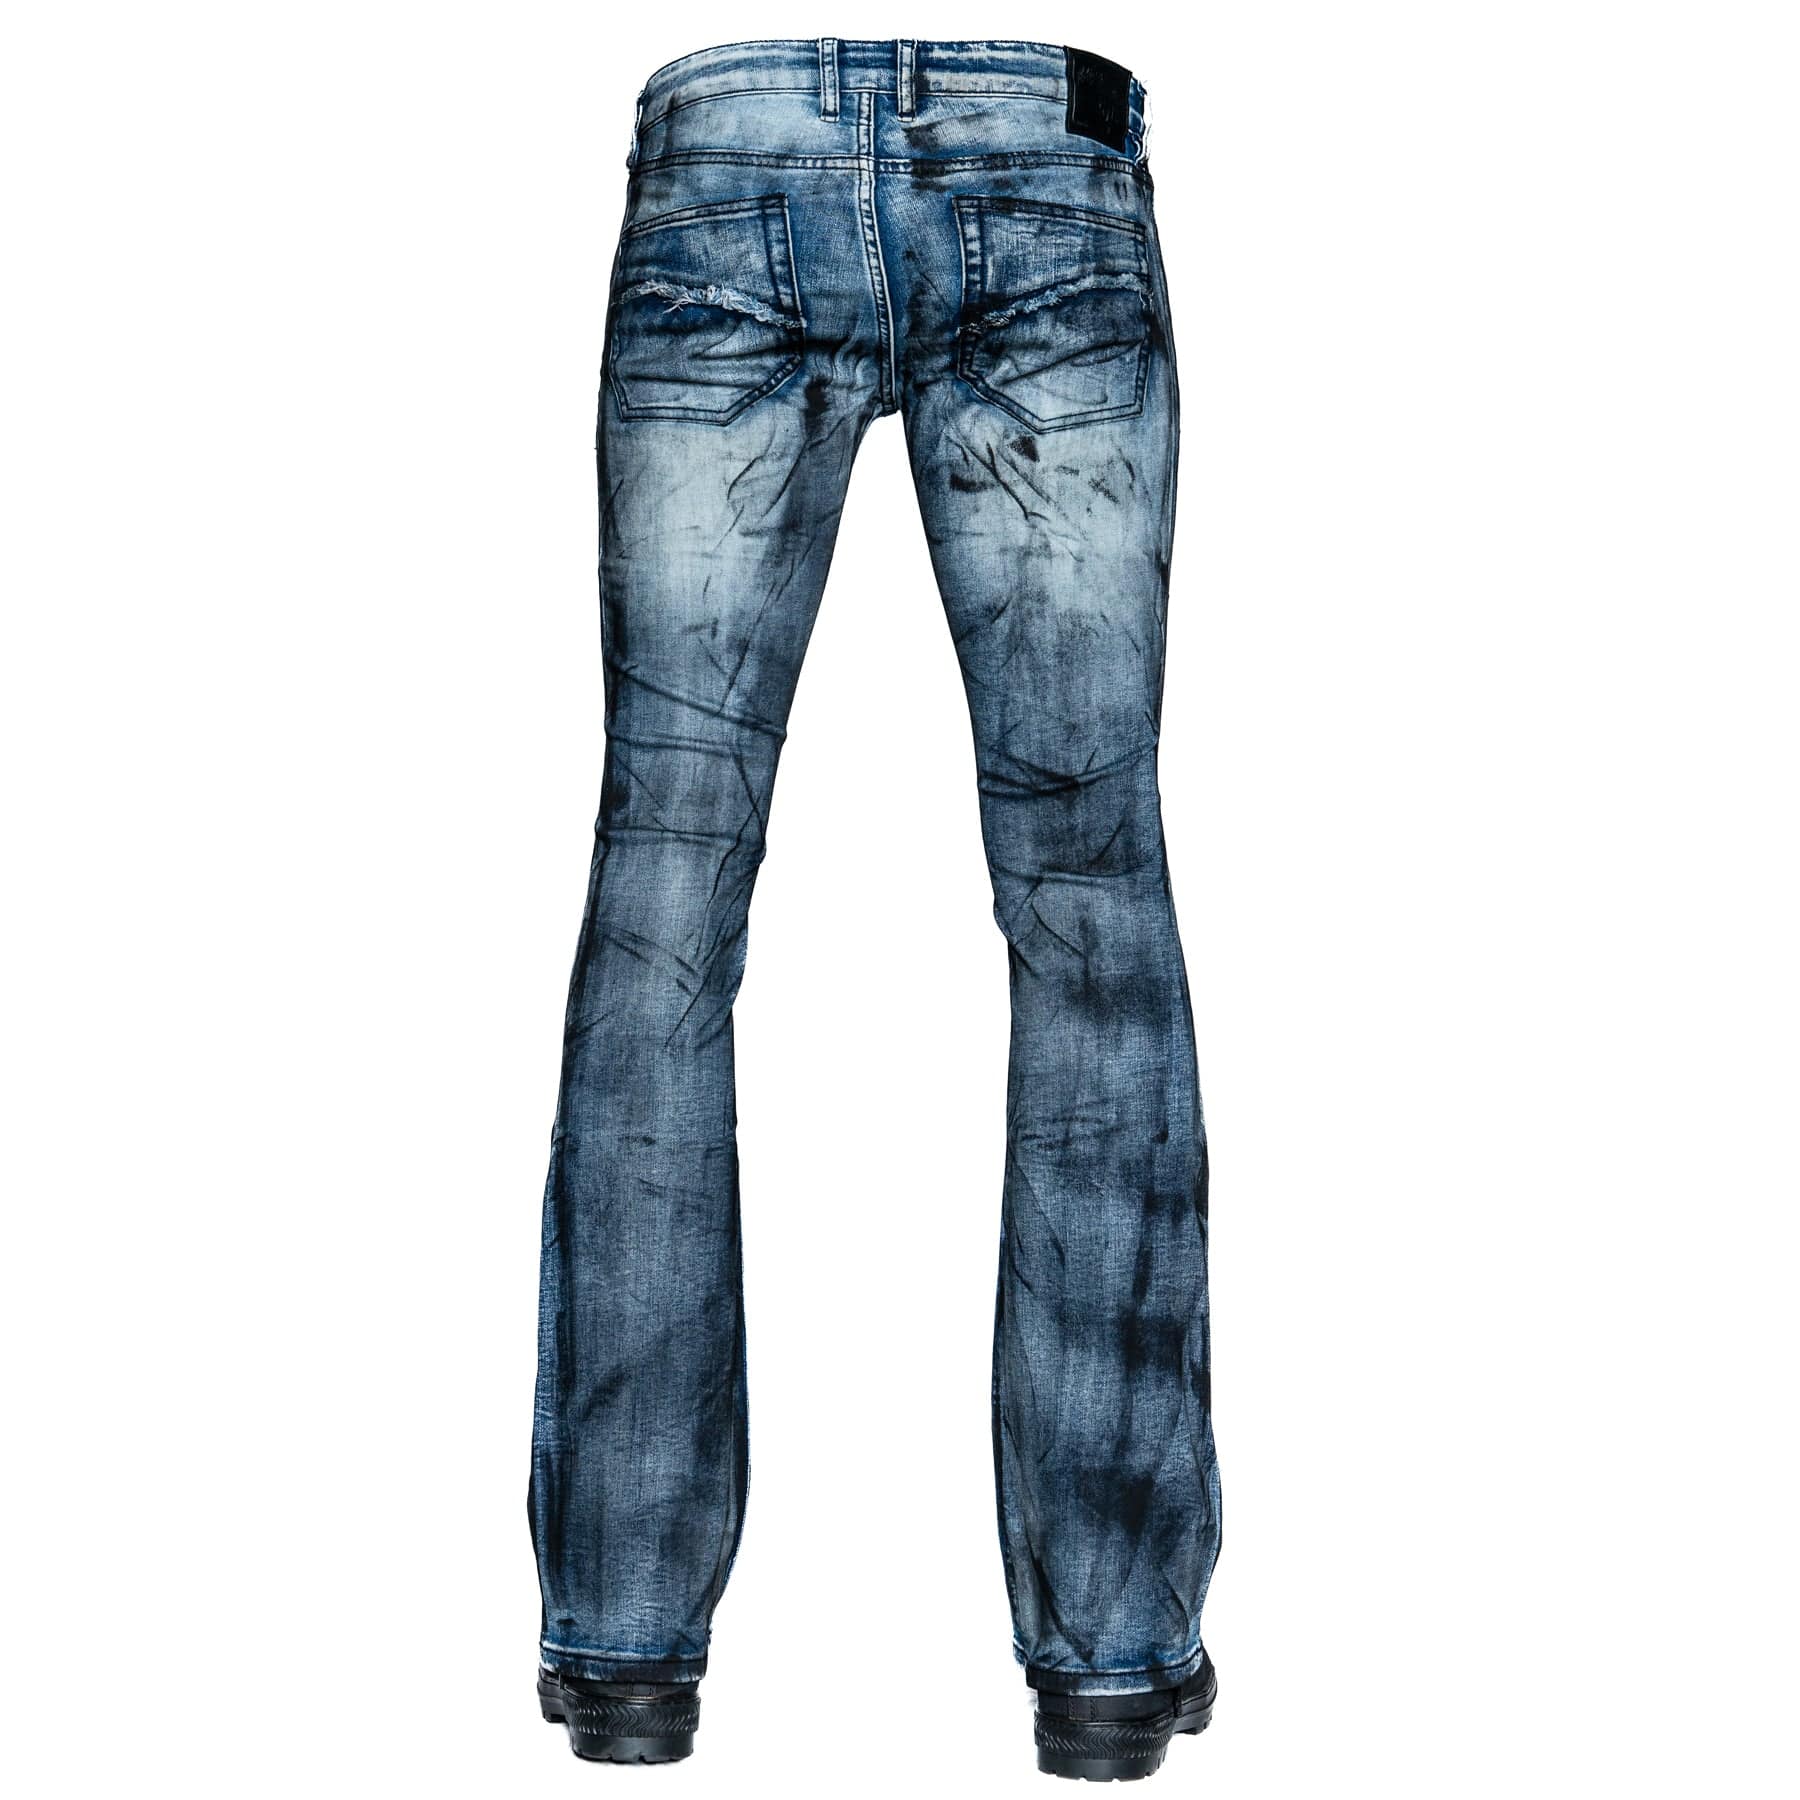 Custom Chop Shop Pants Wornstar Custom Jeans - Black Onyx Alloy Wash - Boot Cut